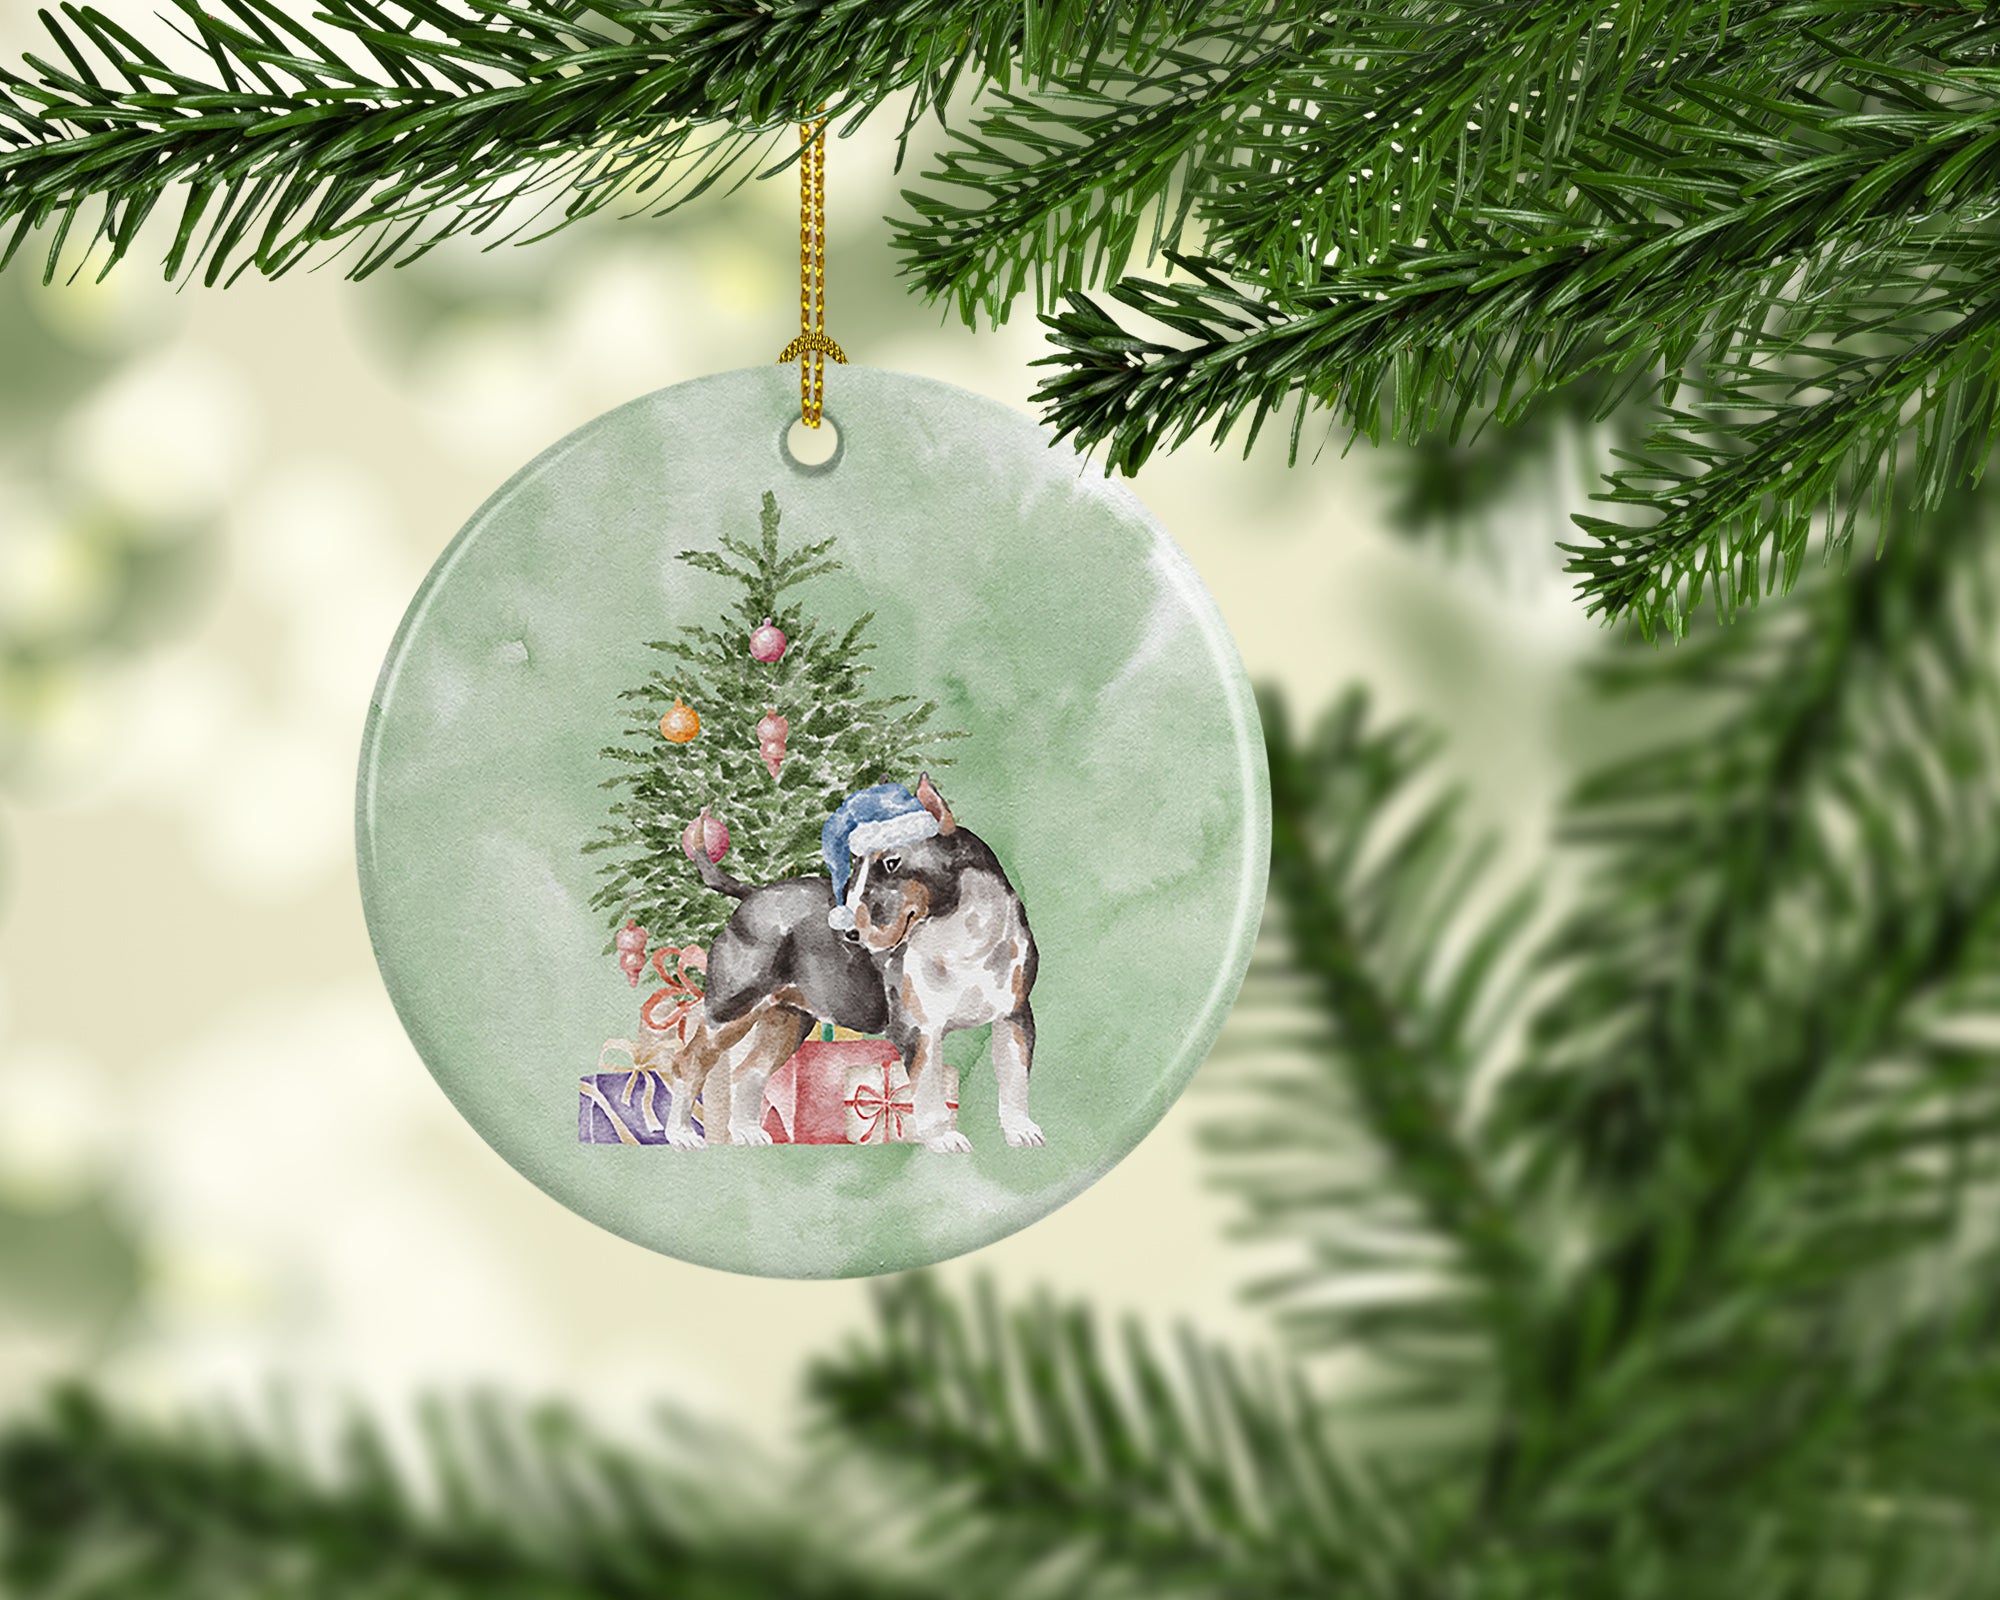 Buy this Christmas Bull Terrier Tricolor Ceramic Ornament